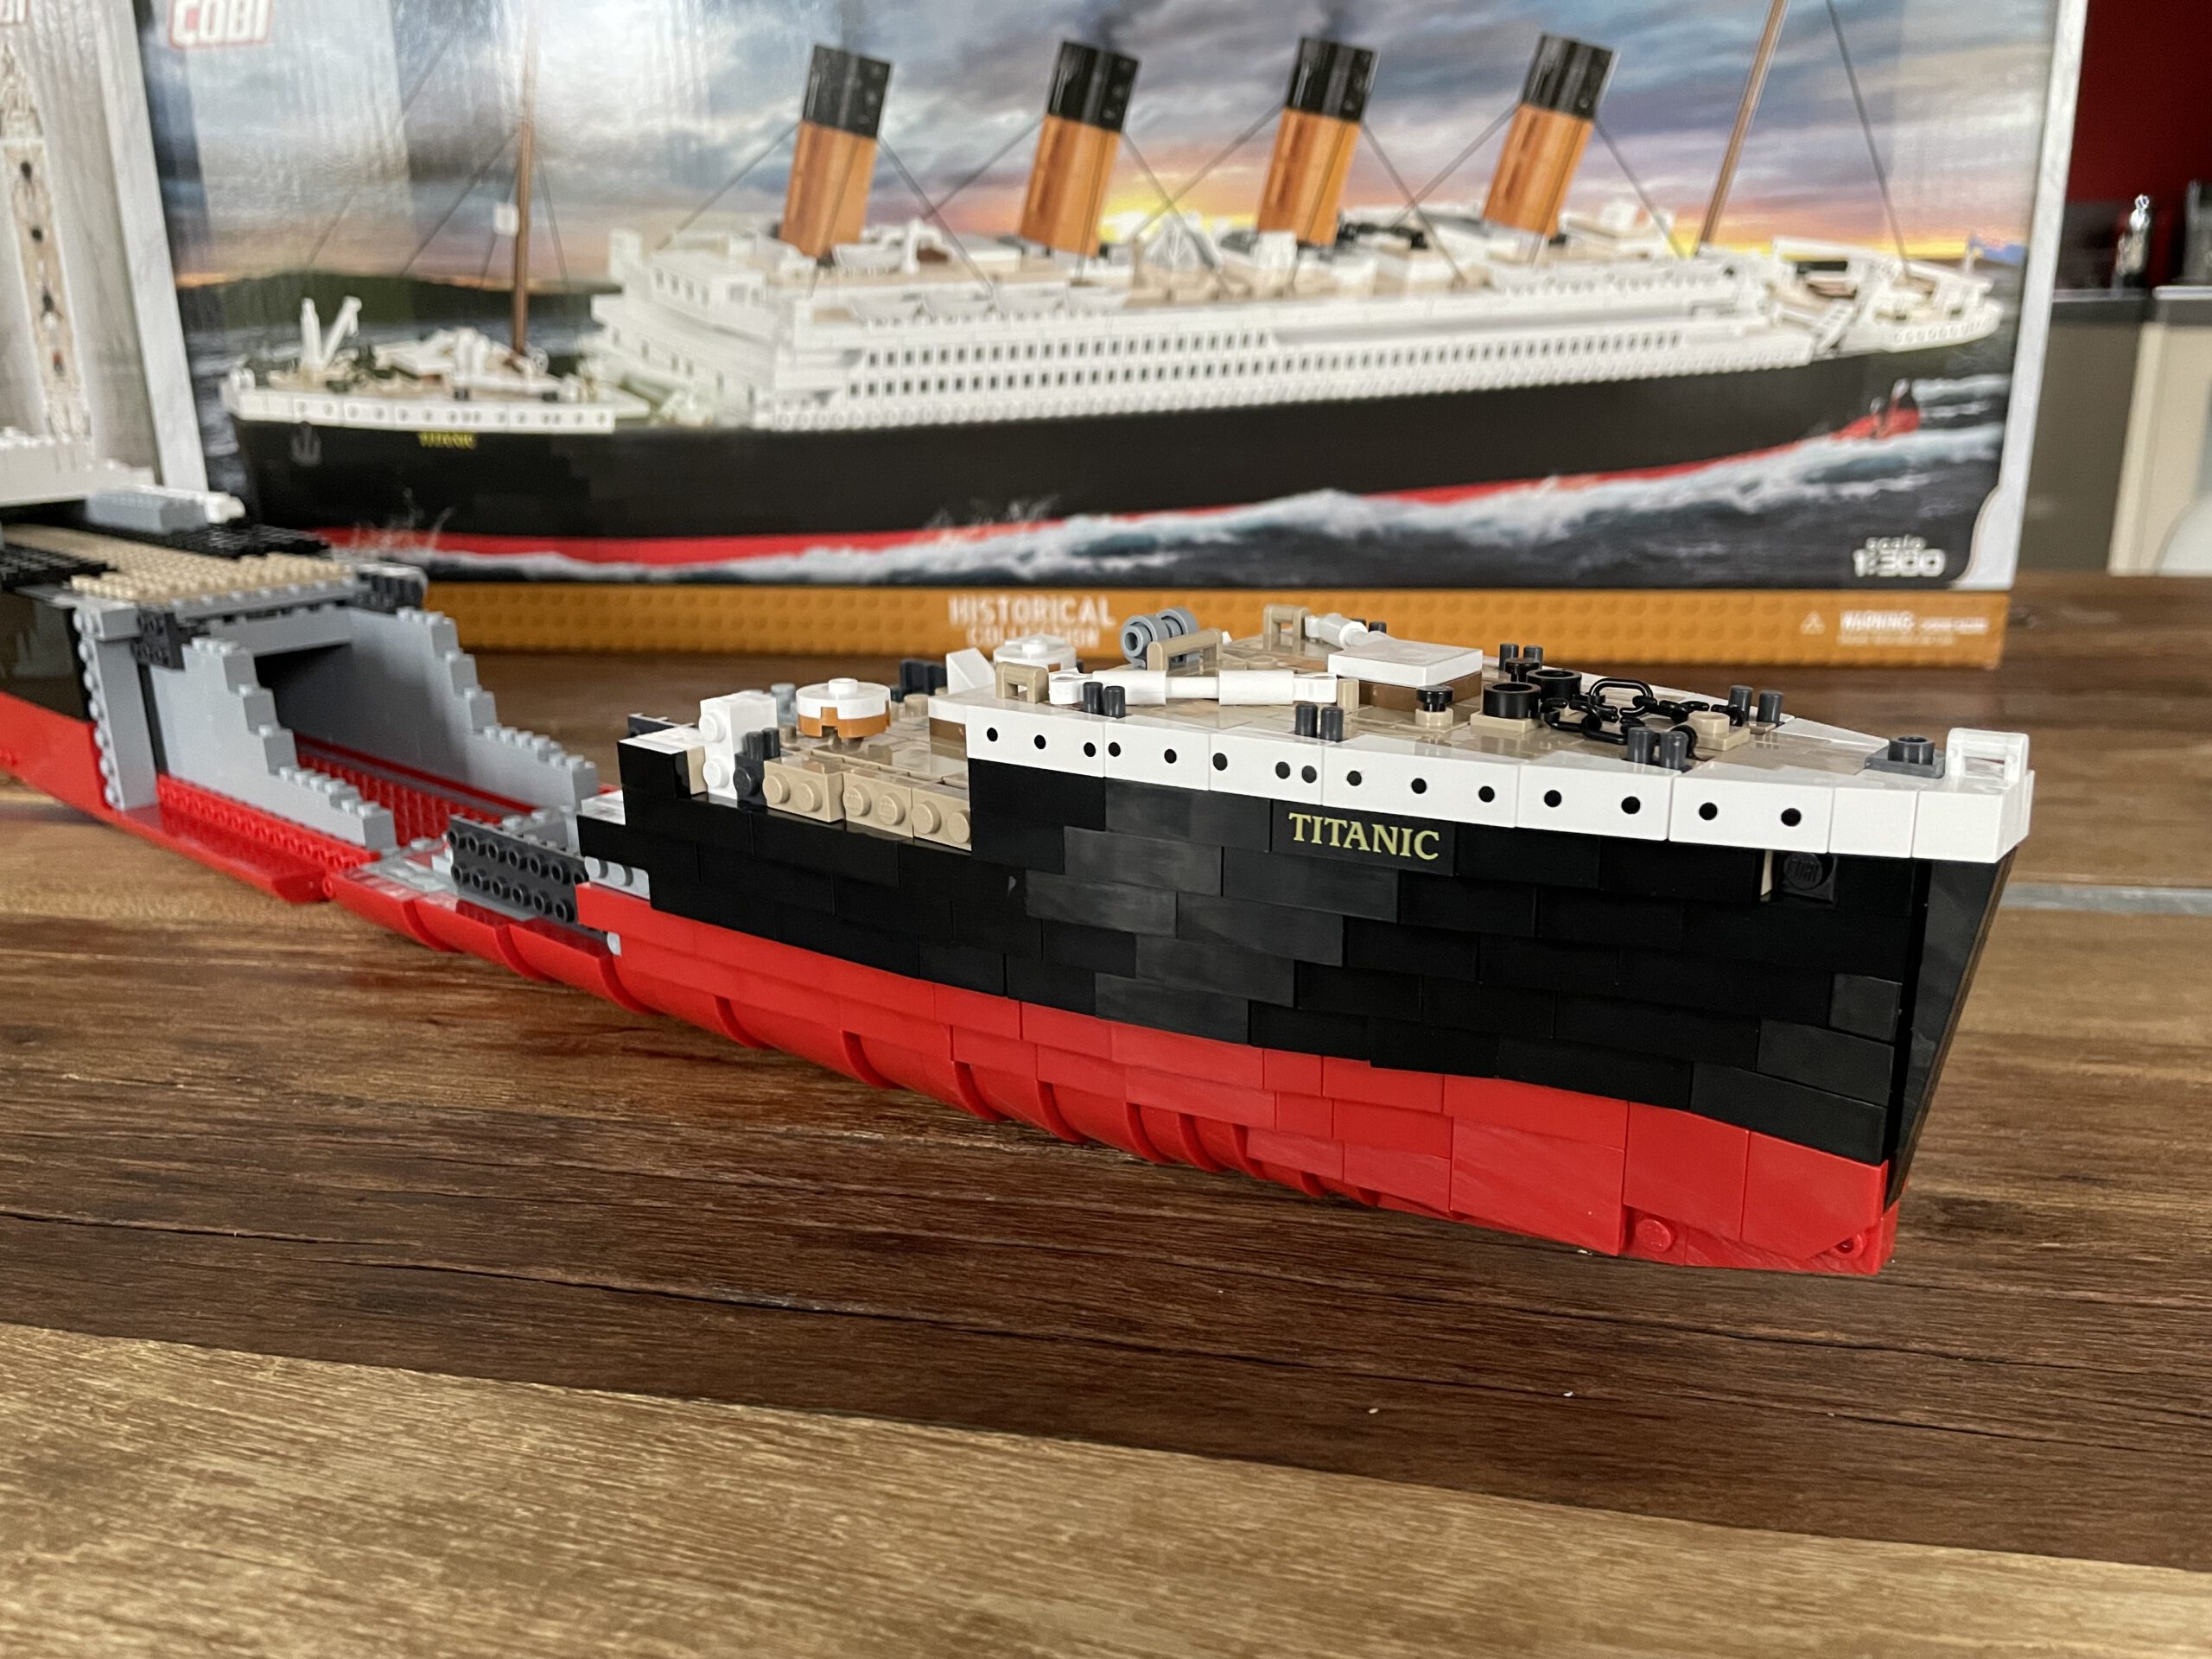 Cobi 1916 RMS Titanic